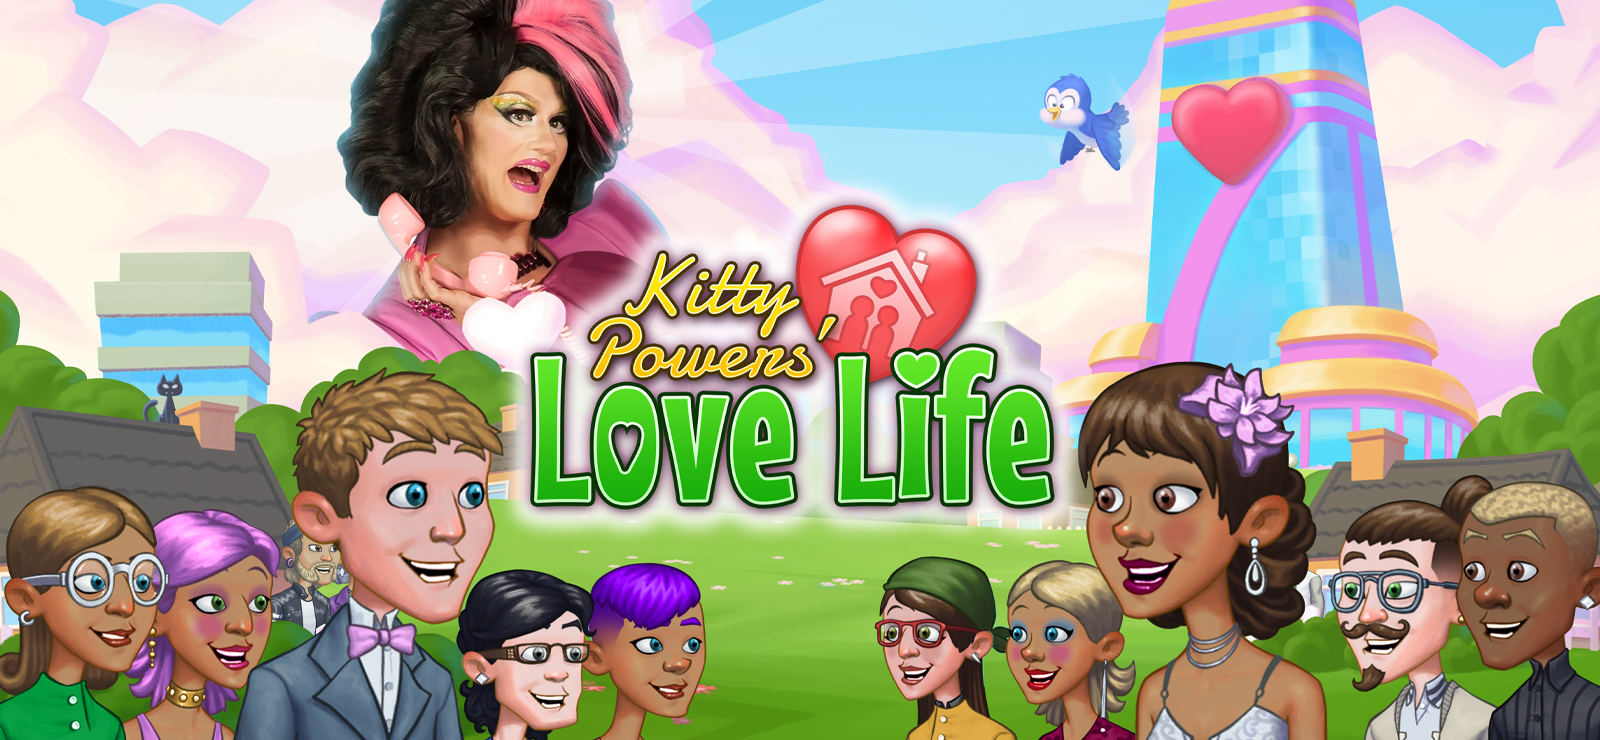 Kitty Powers’ Love Life